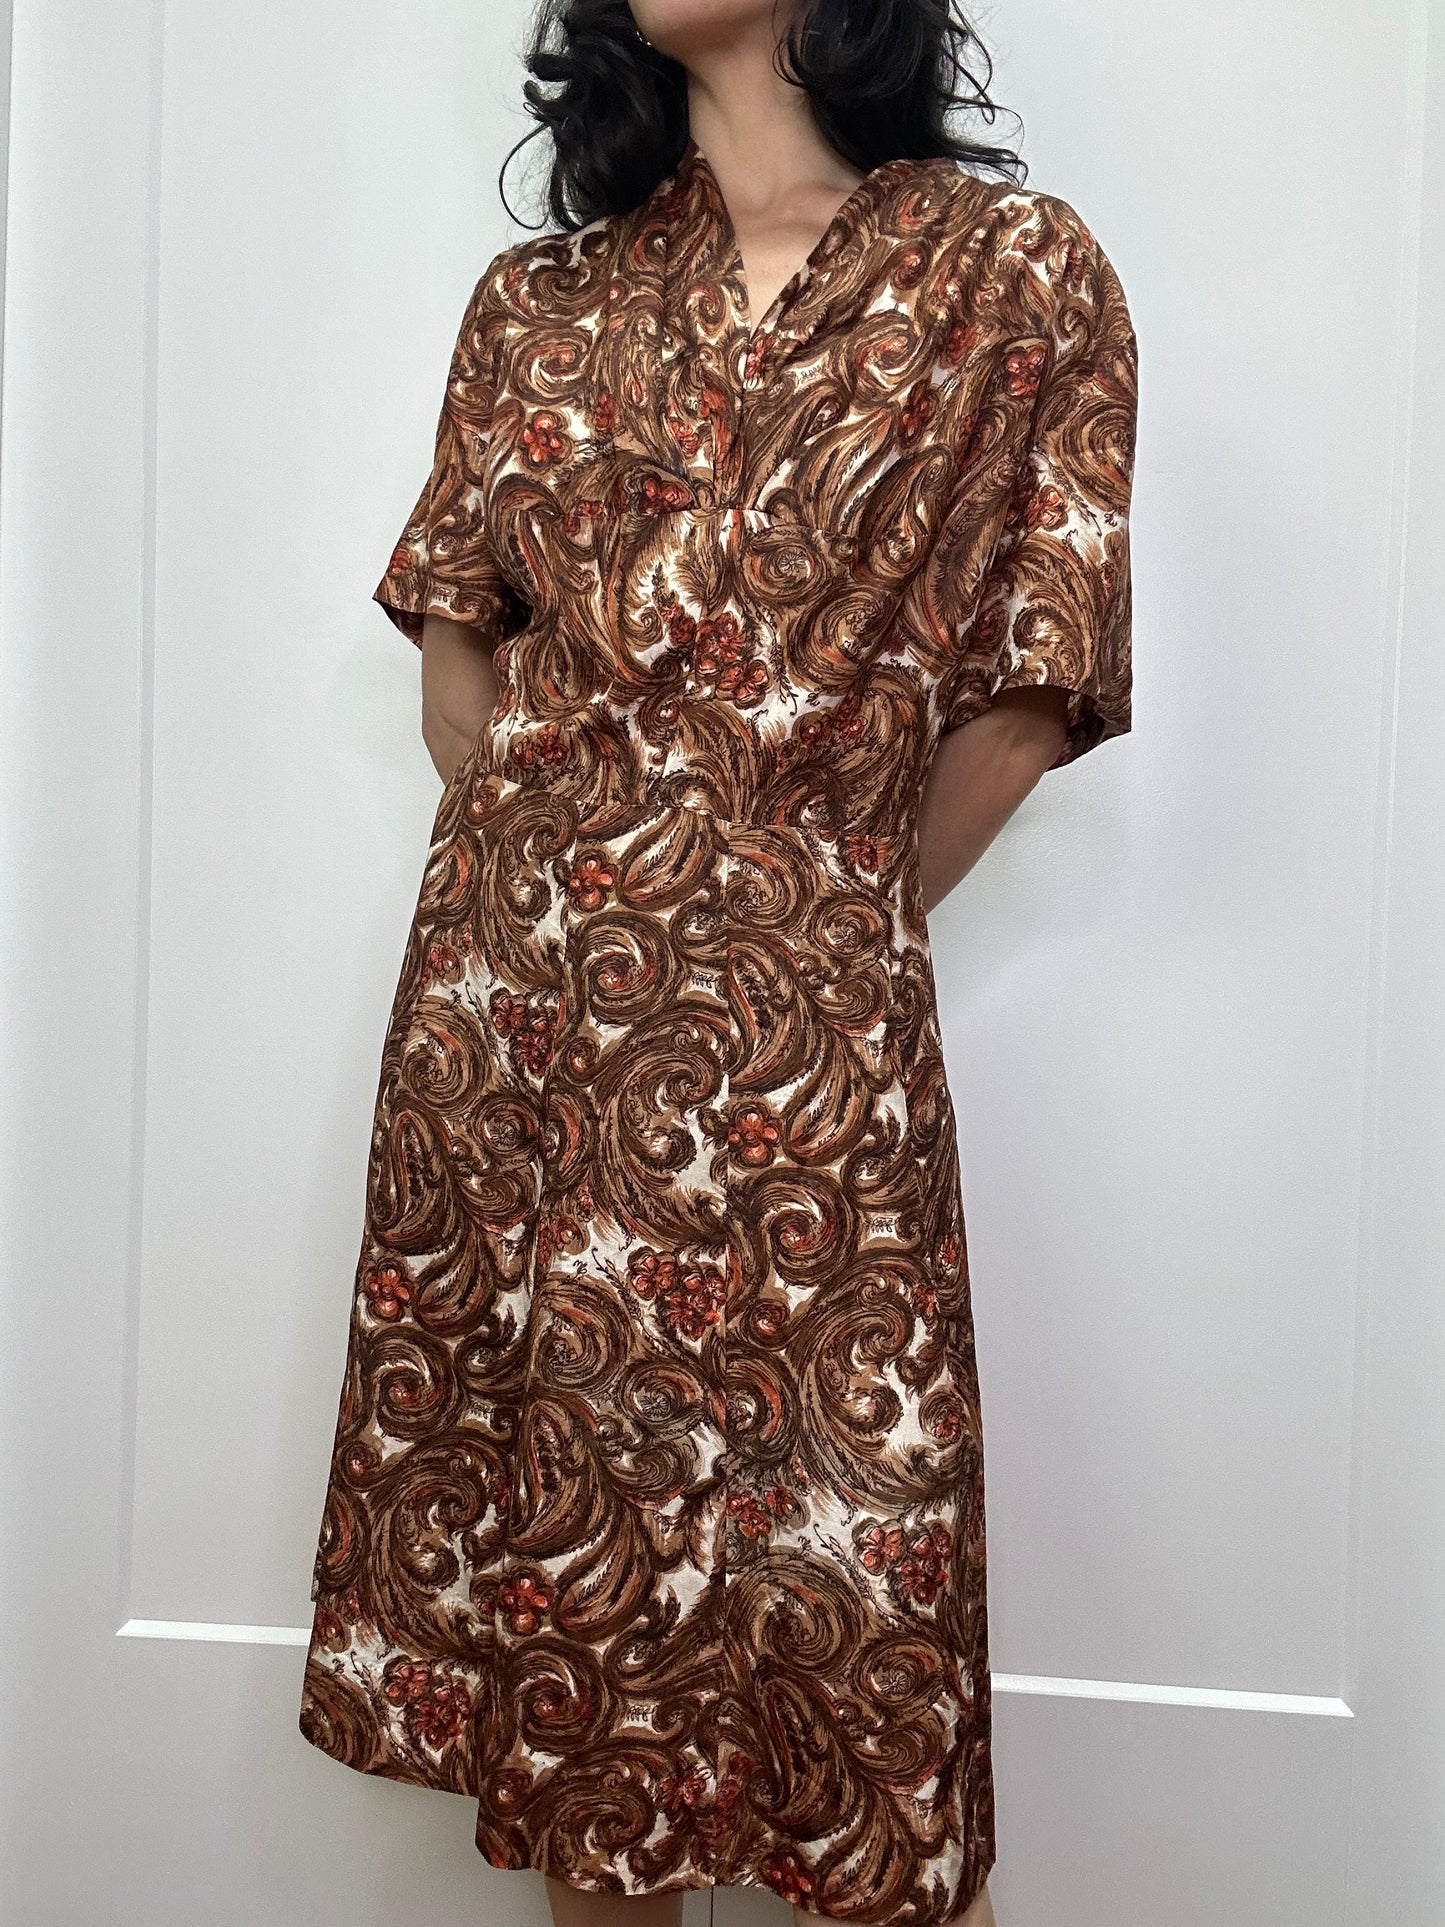 Marykate Dress, 1950’s, 44” Bust, 36” Waist